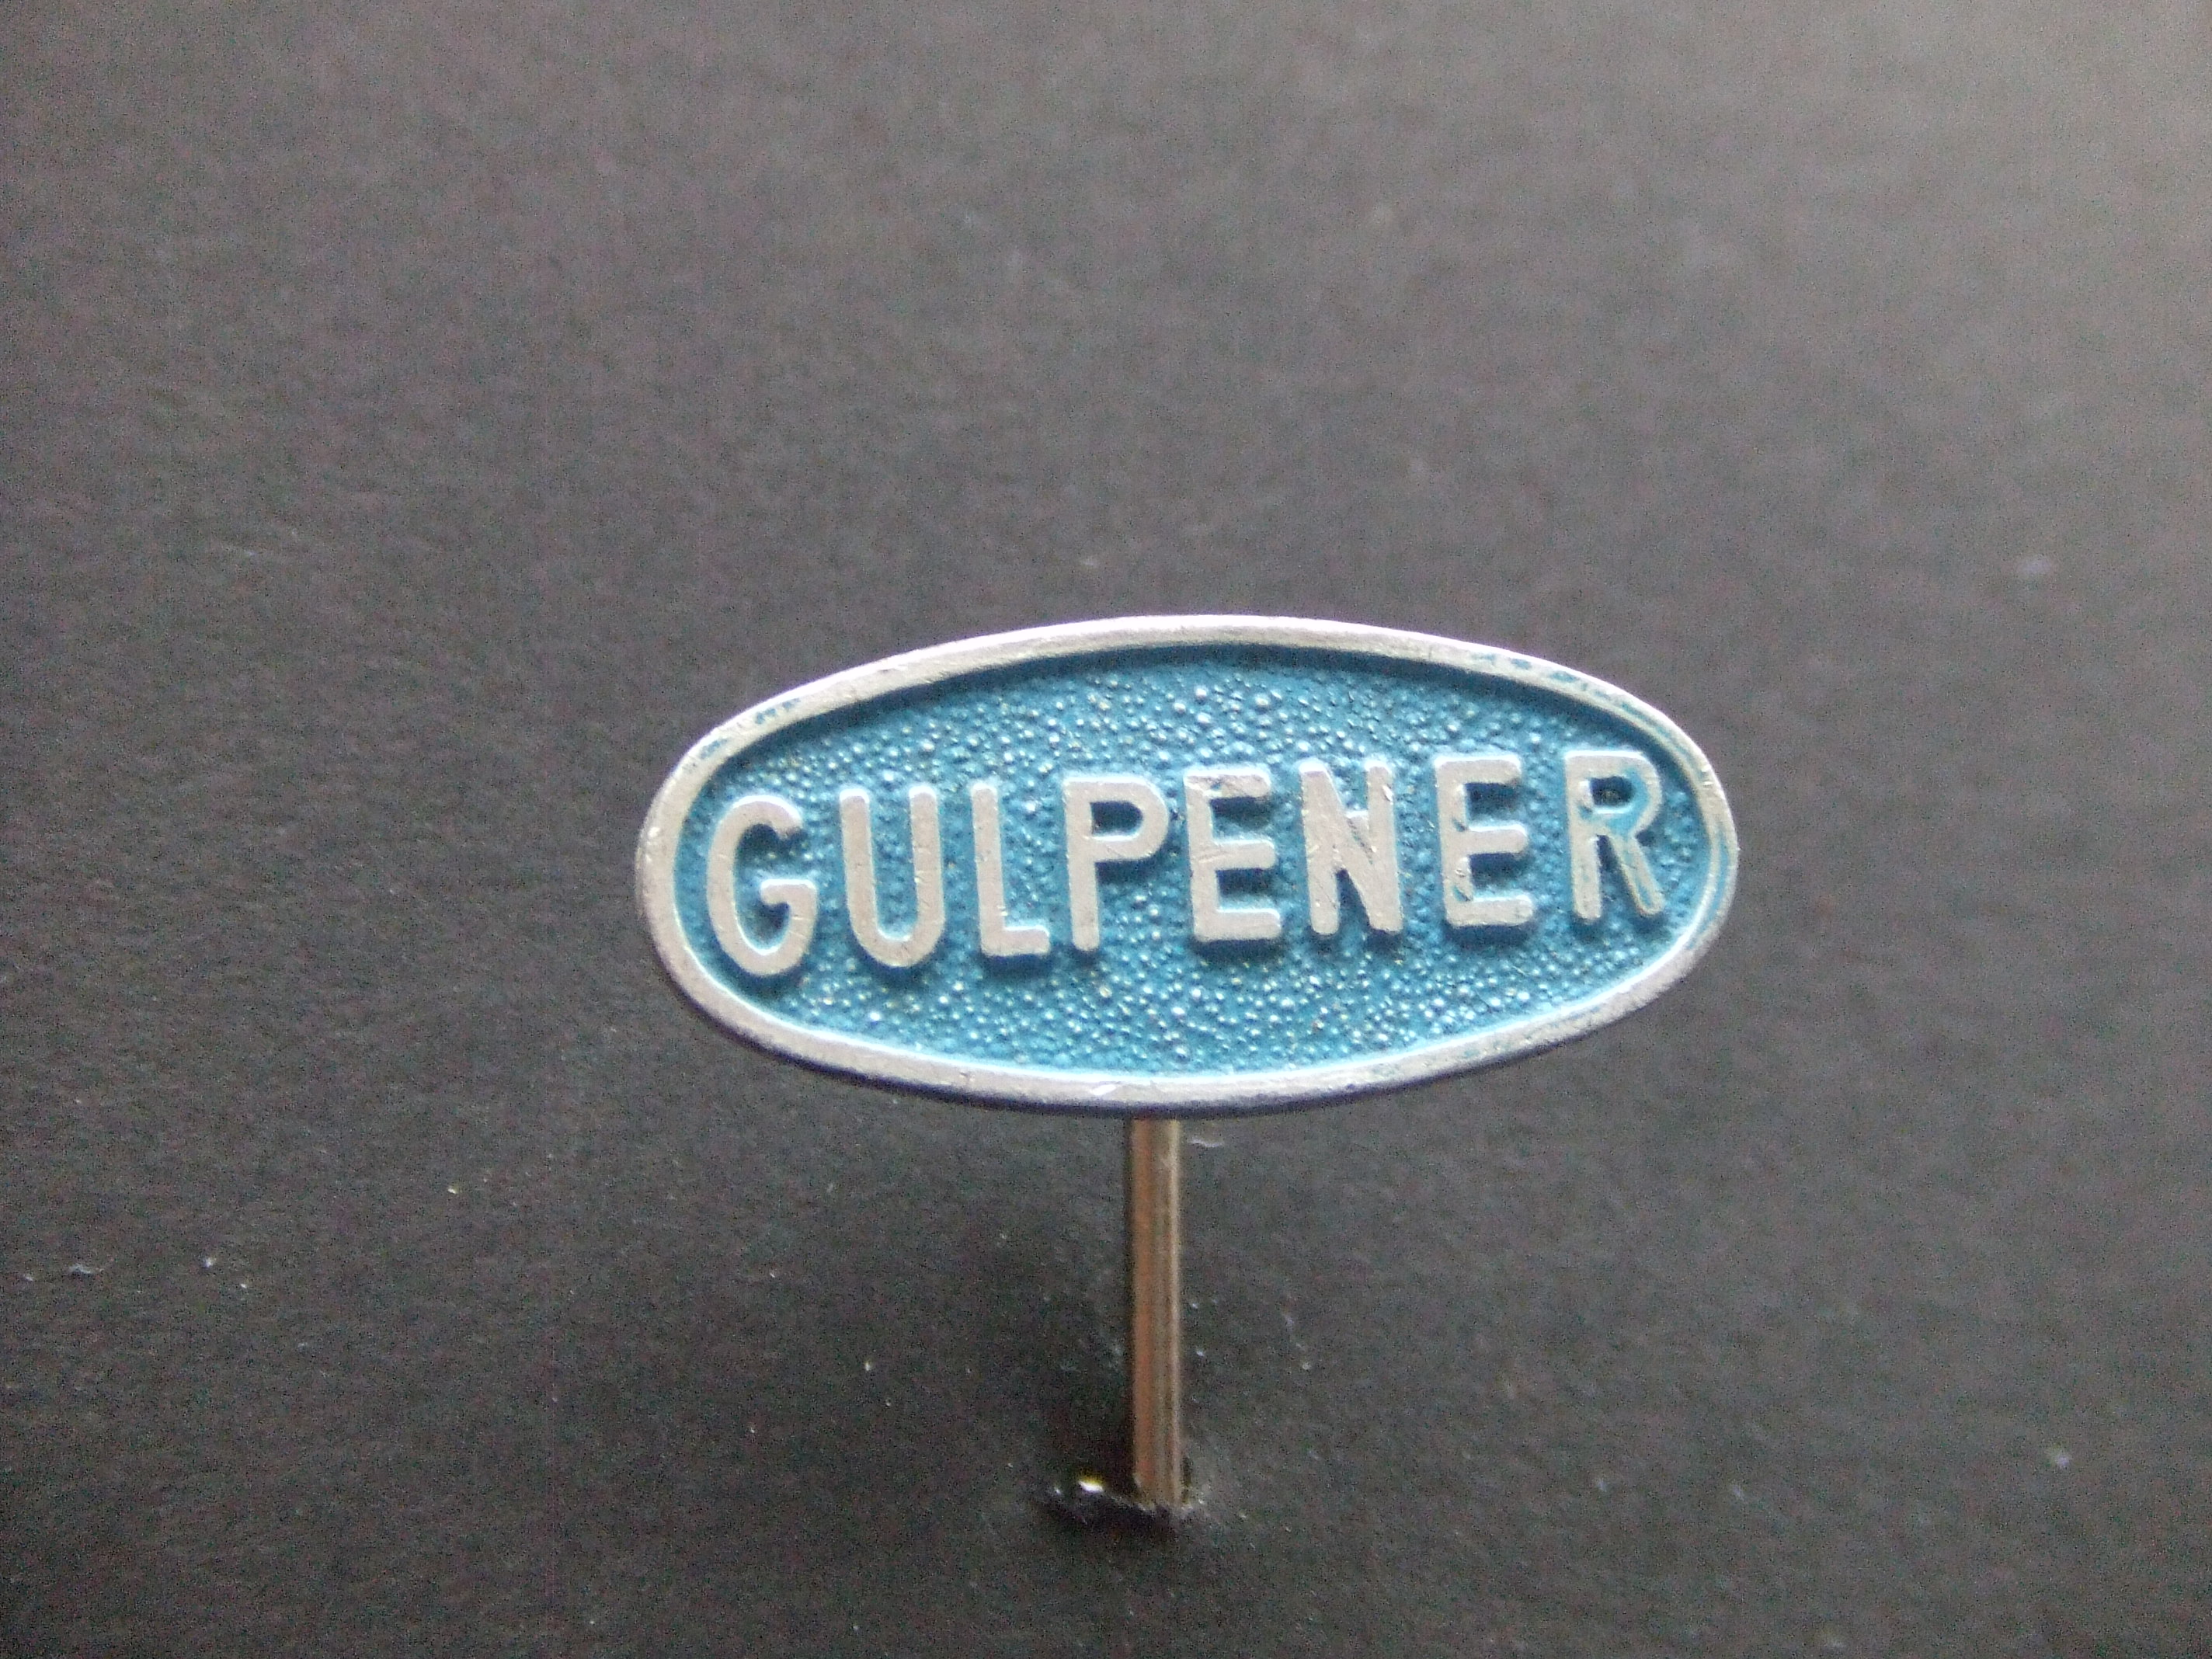 Gulpener bier logo blauw